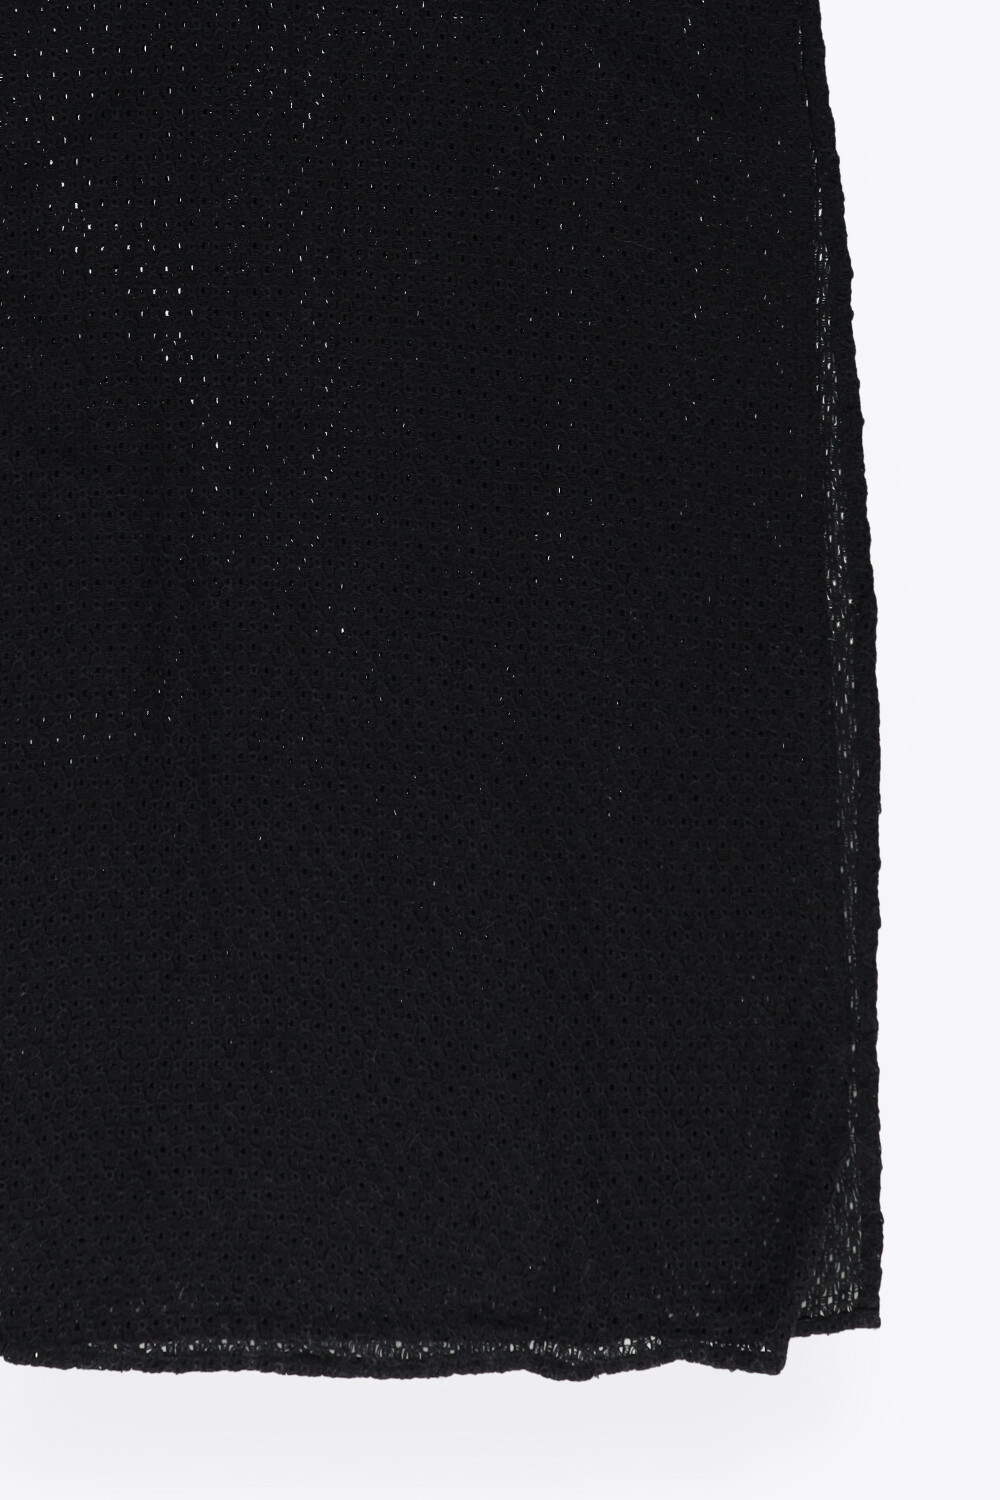 plażowa czarna sukienka ażurowa maxi 